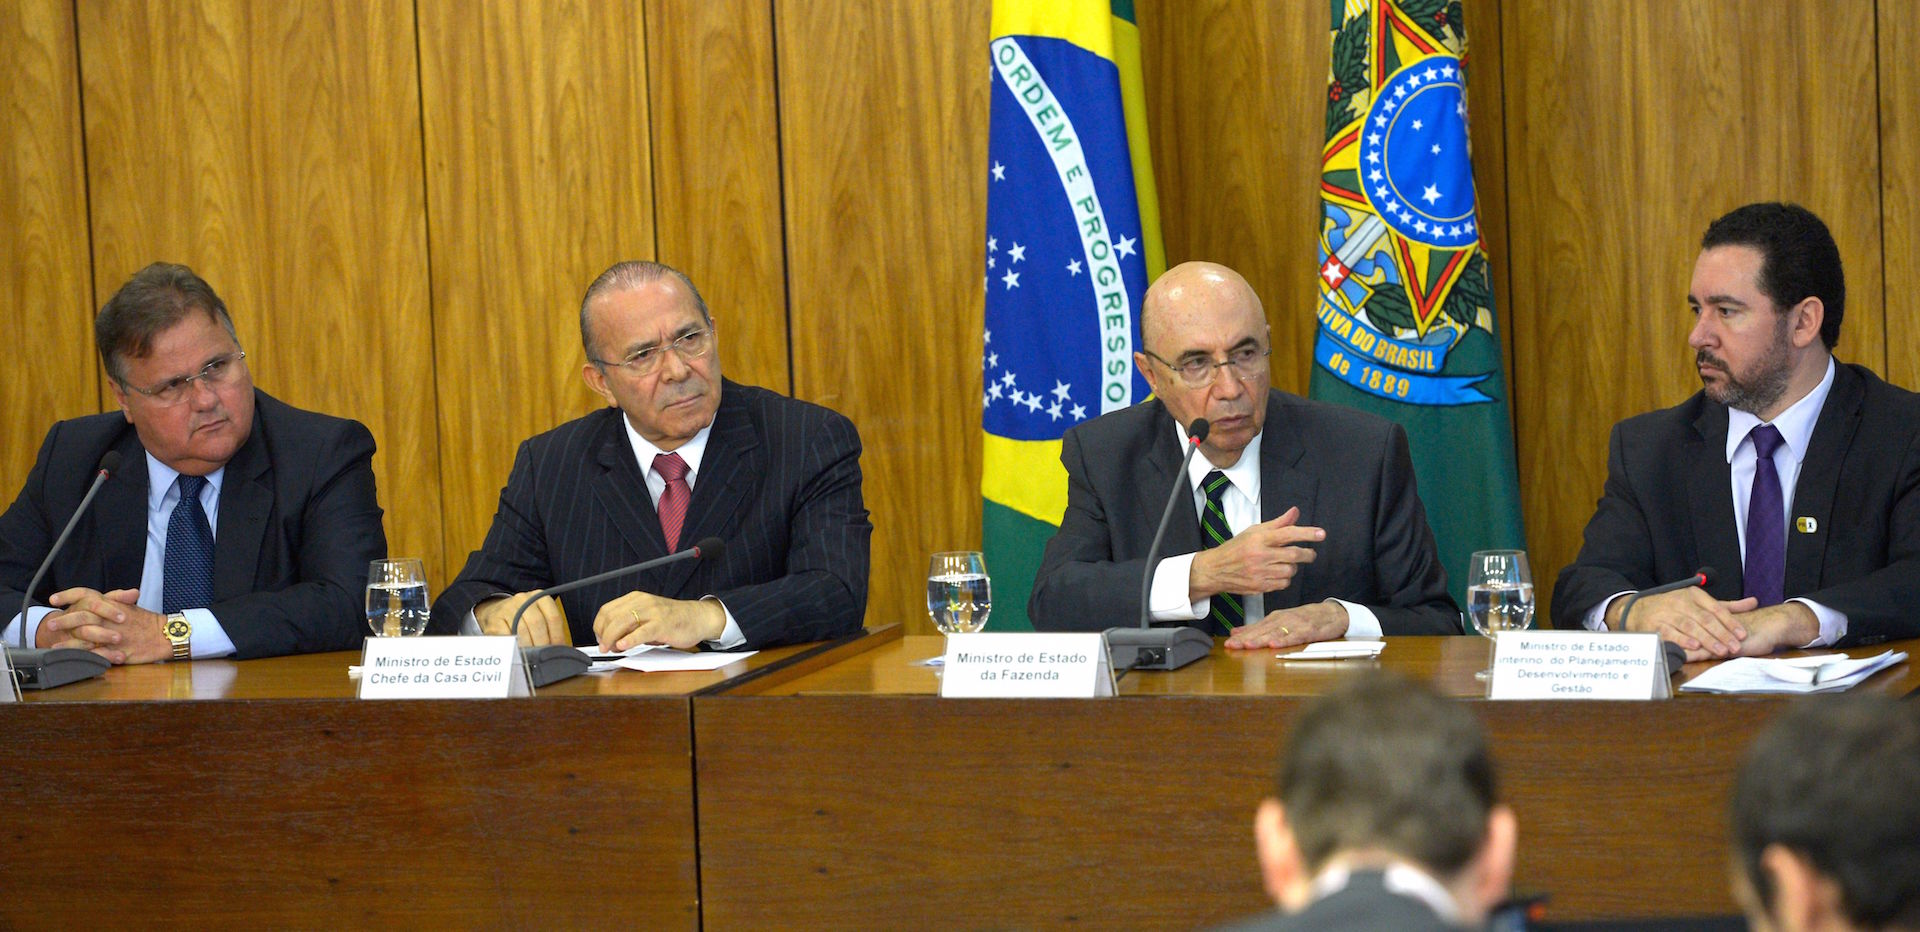 brazilian government announces new economic measures - the rio times